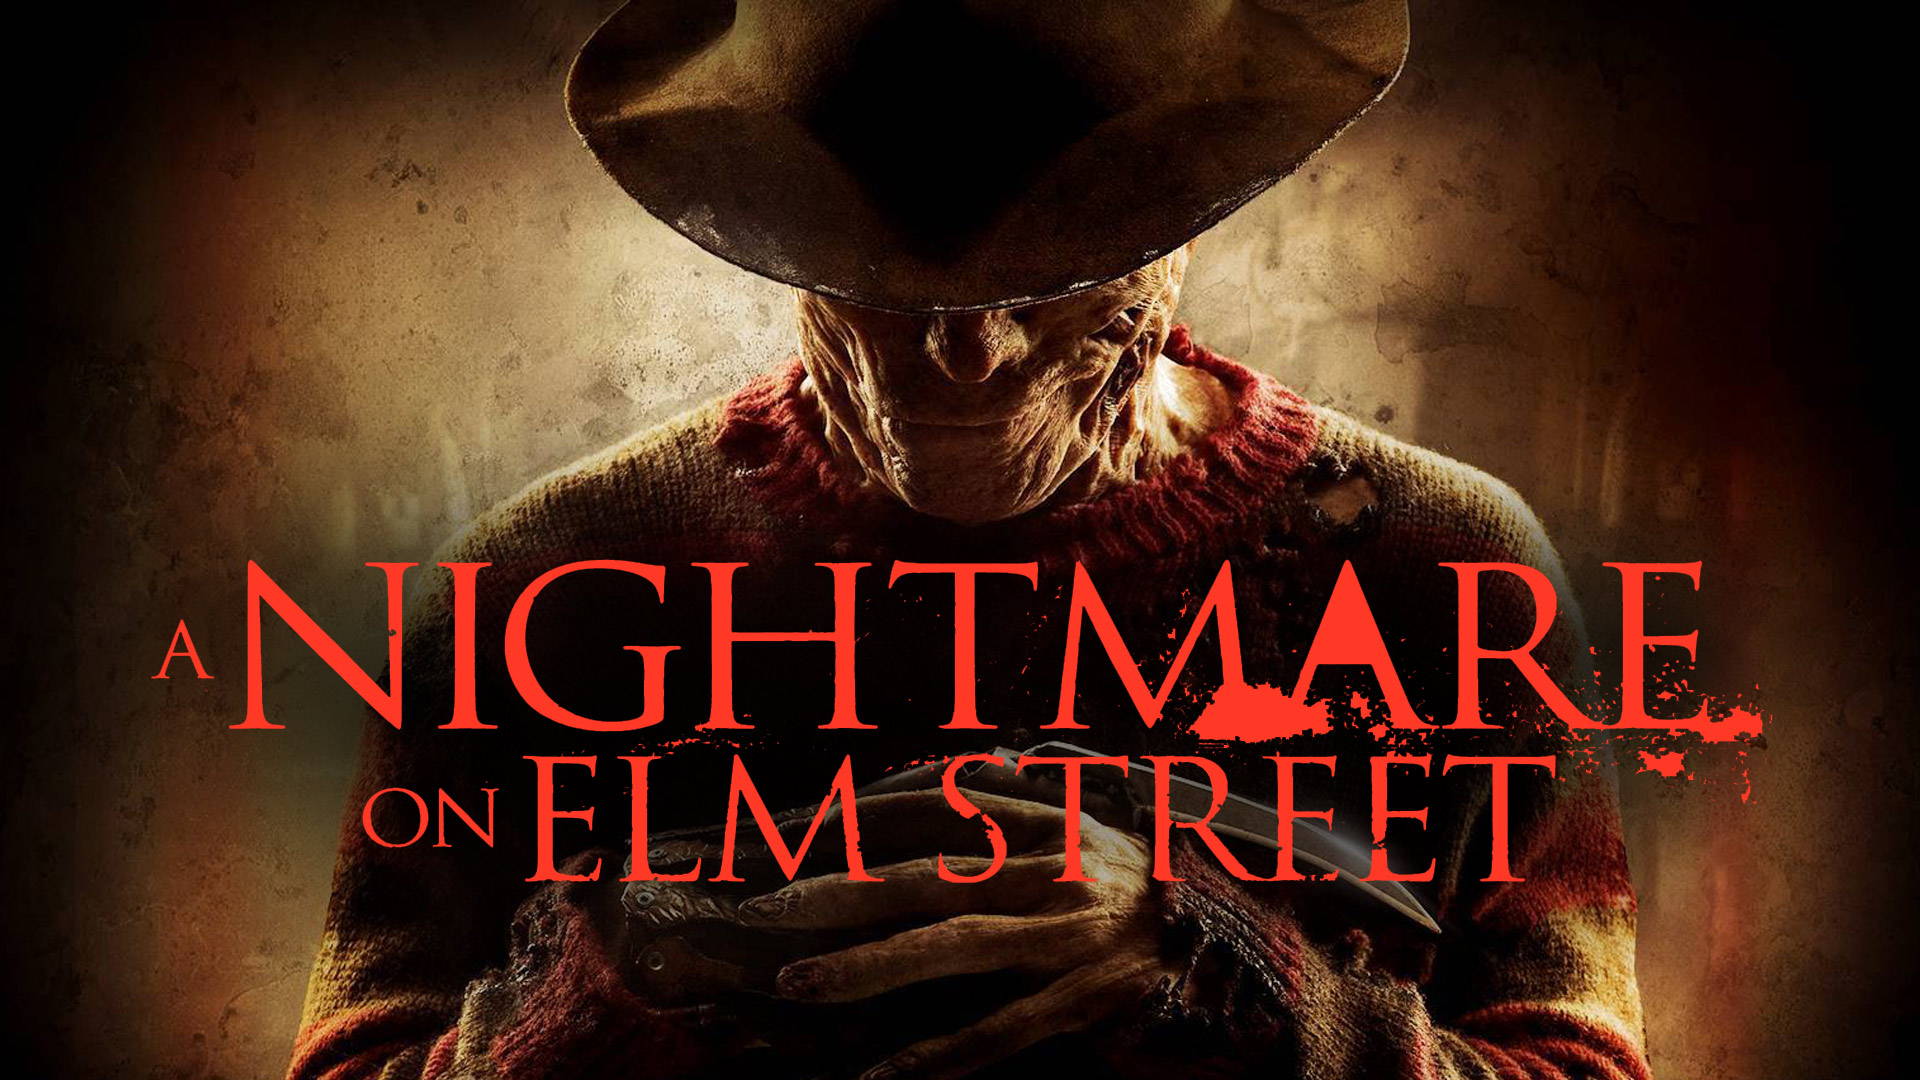 a nightmare on elm street movie poster